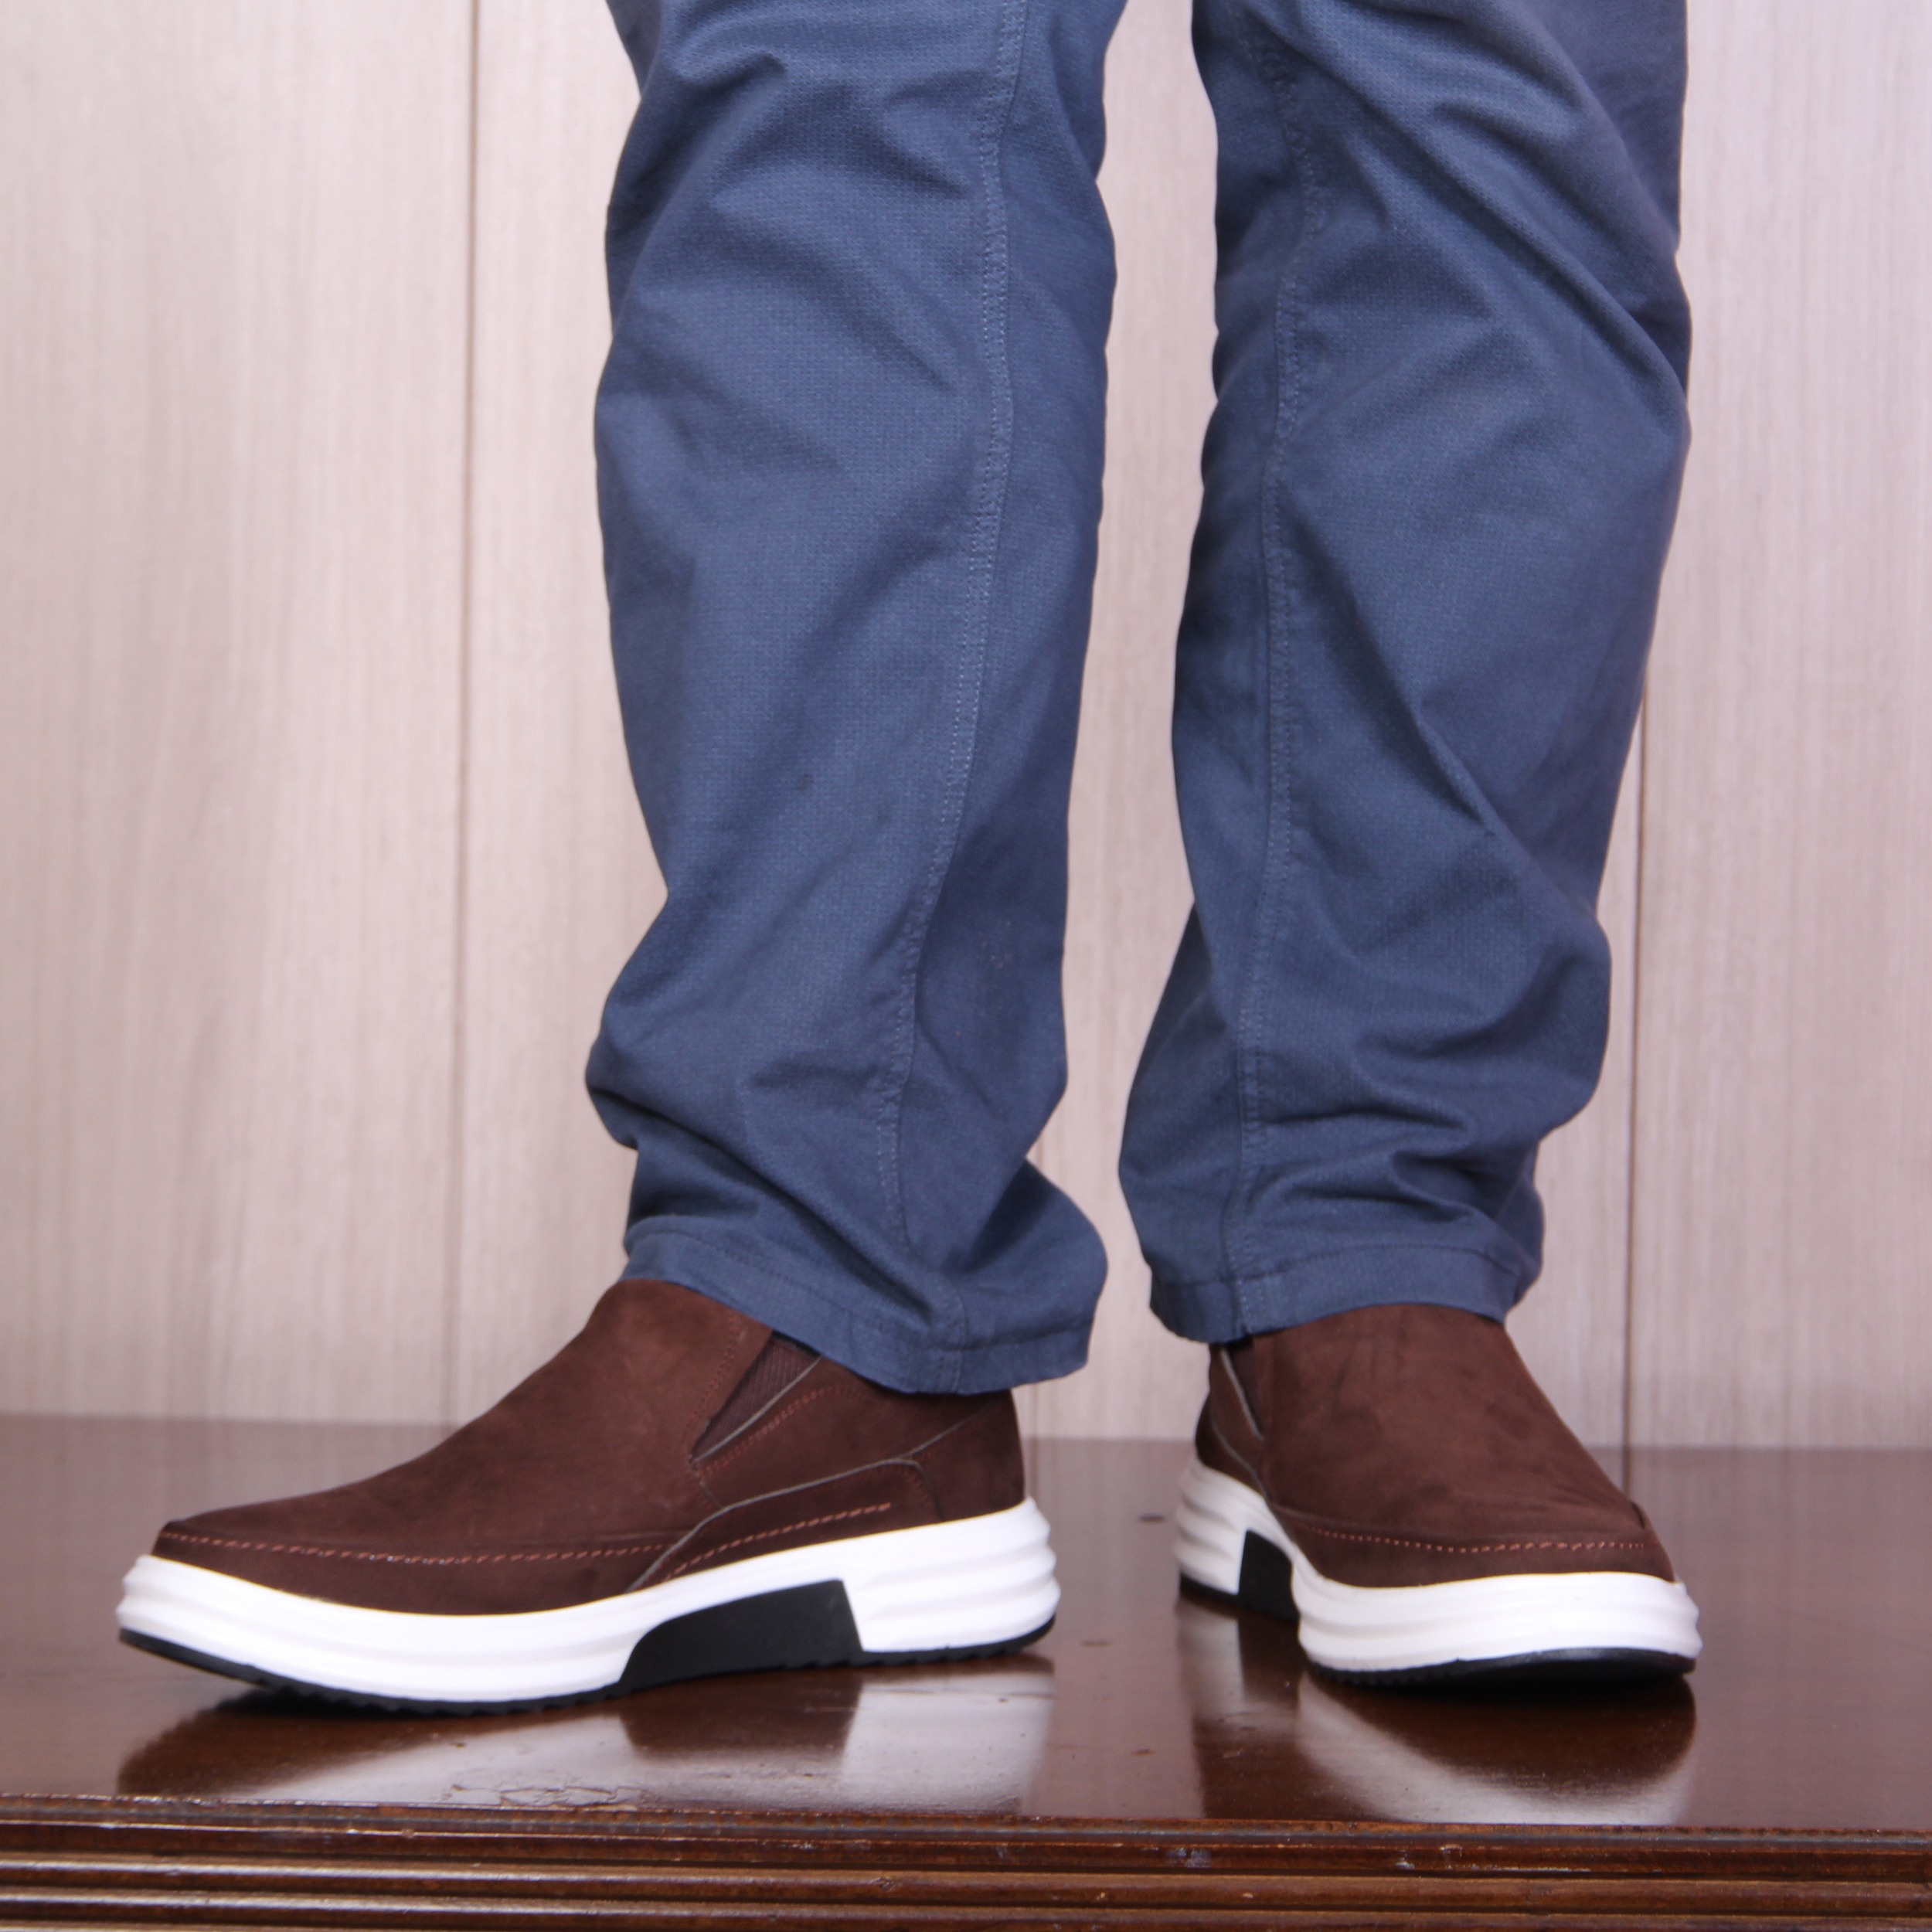 SHAHRECHARM leather men's casual shoes , F6046-3 Model